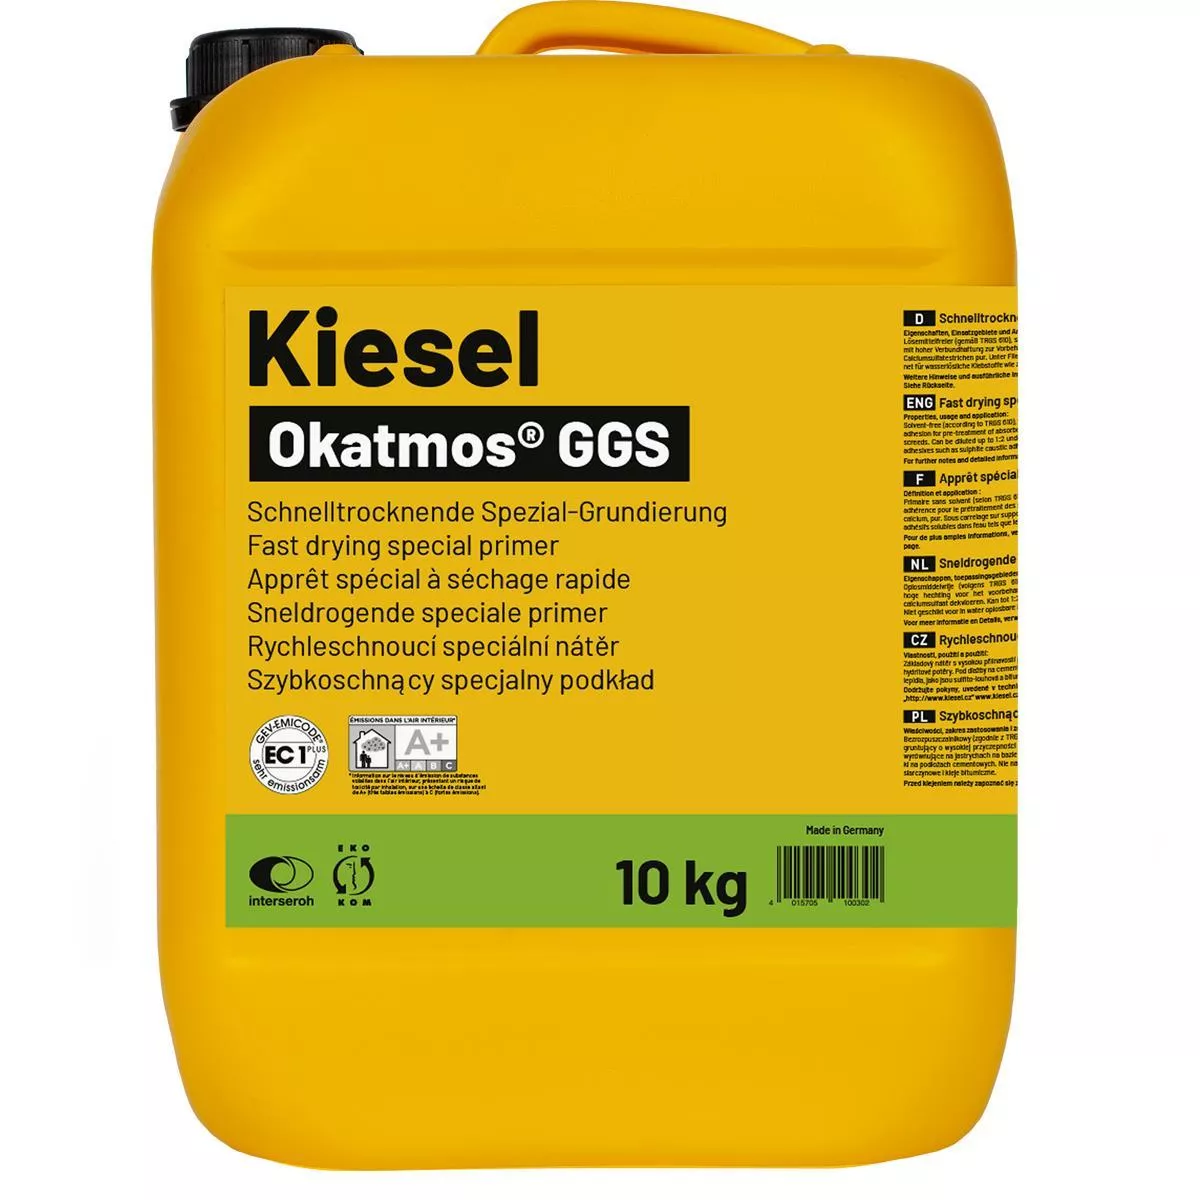 Special primer Okatmos GGS 10 kg